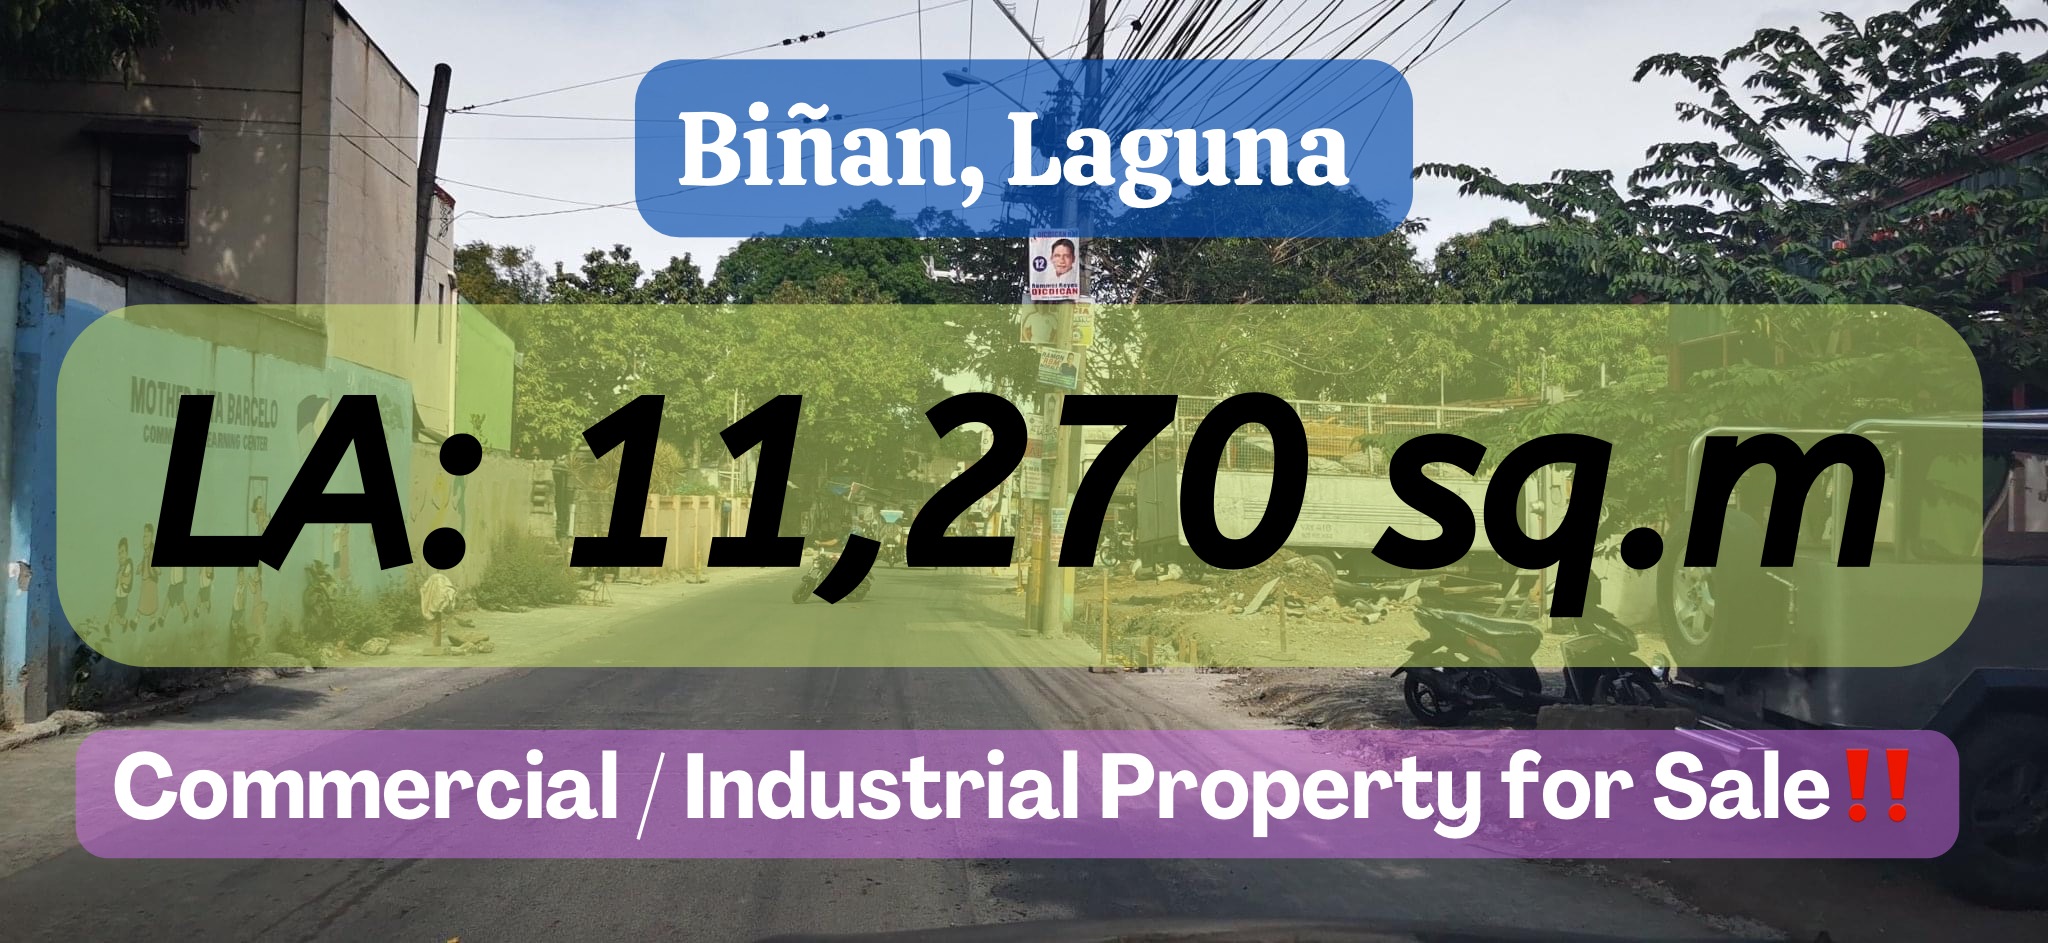 Biñan, Laguna Commercial / Industrial Property for Sale‼️